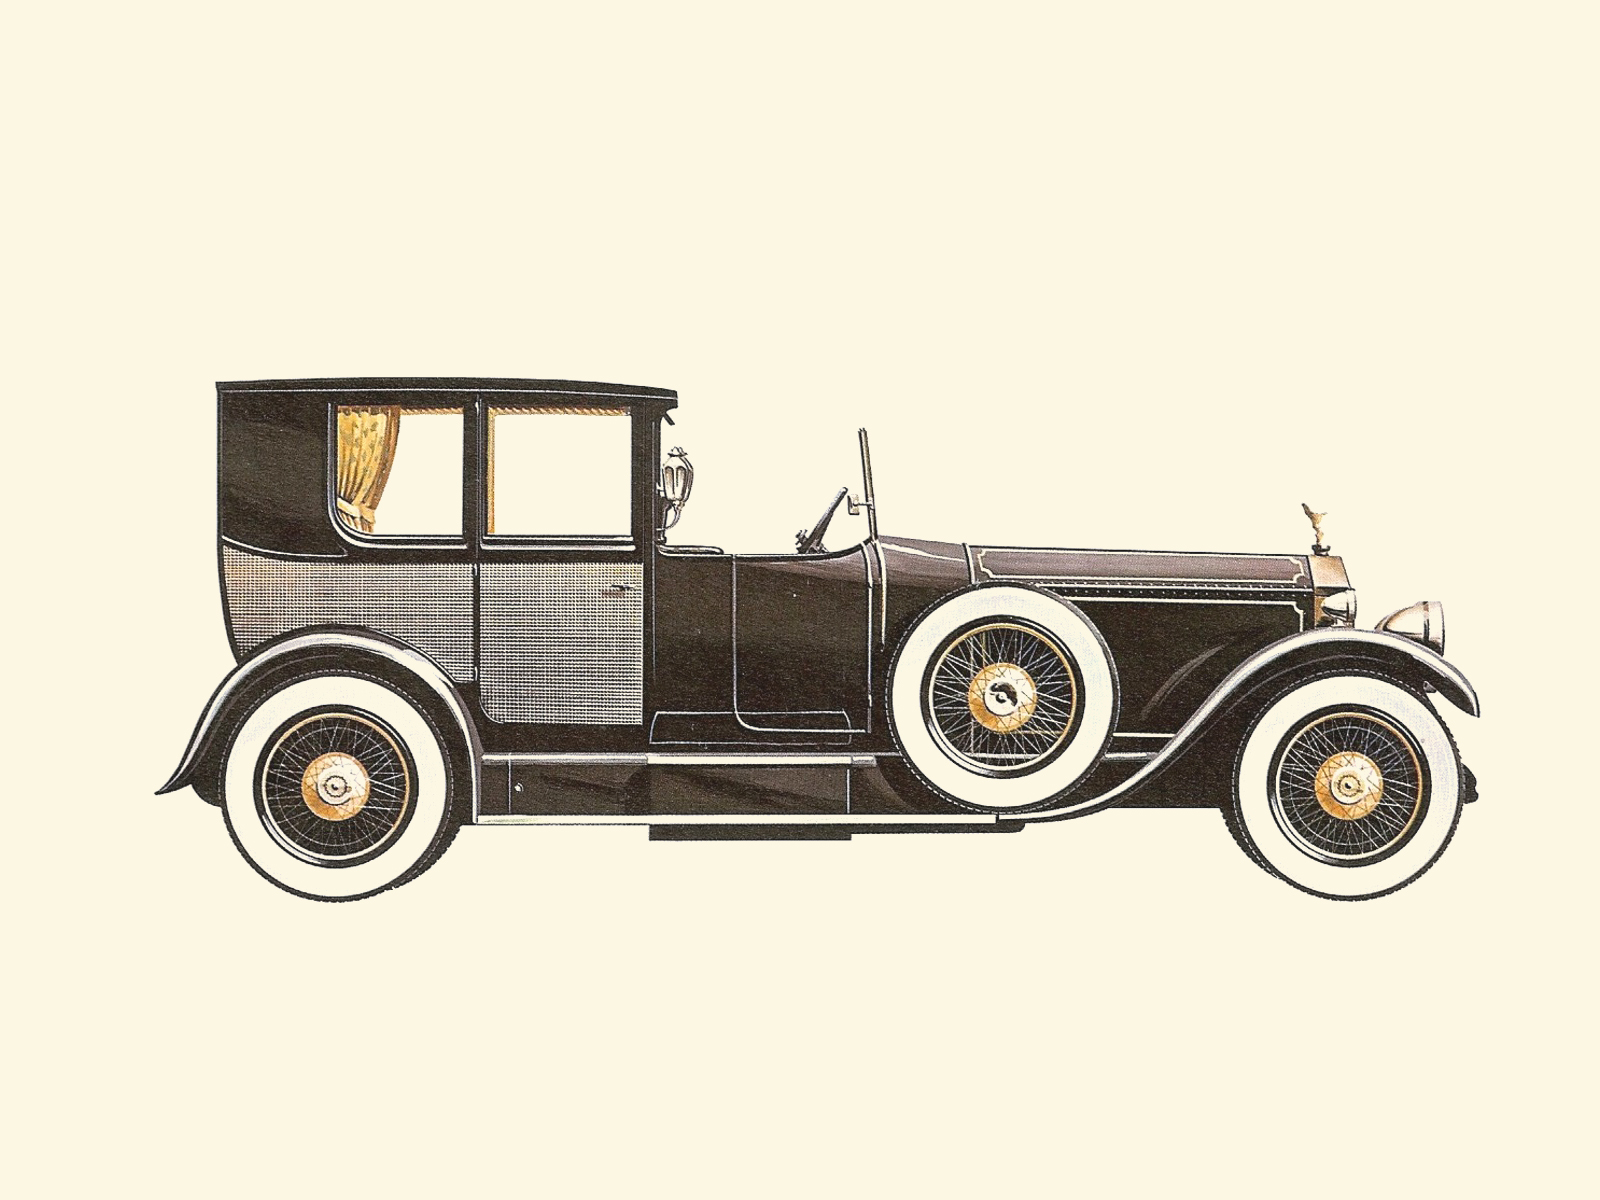 1927 Rolls-Royce Phantom I - Illustrated by Pierre Dumont